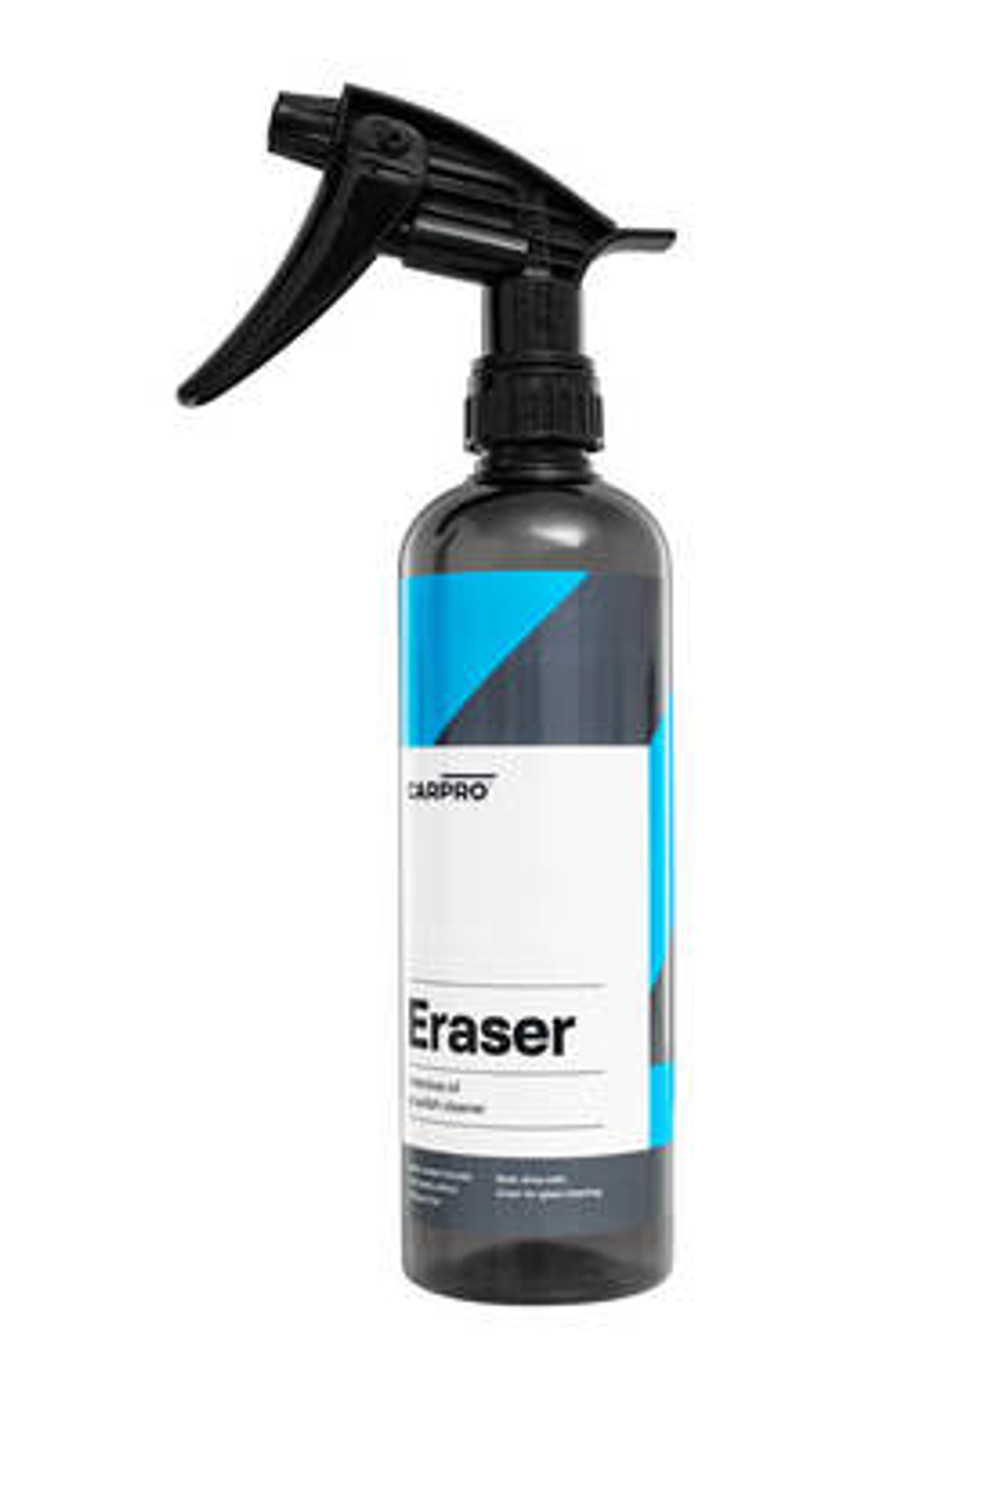 CARPRO Eraser 500ml - メンテナンス用品